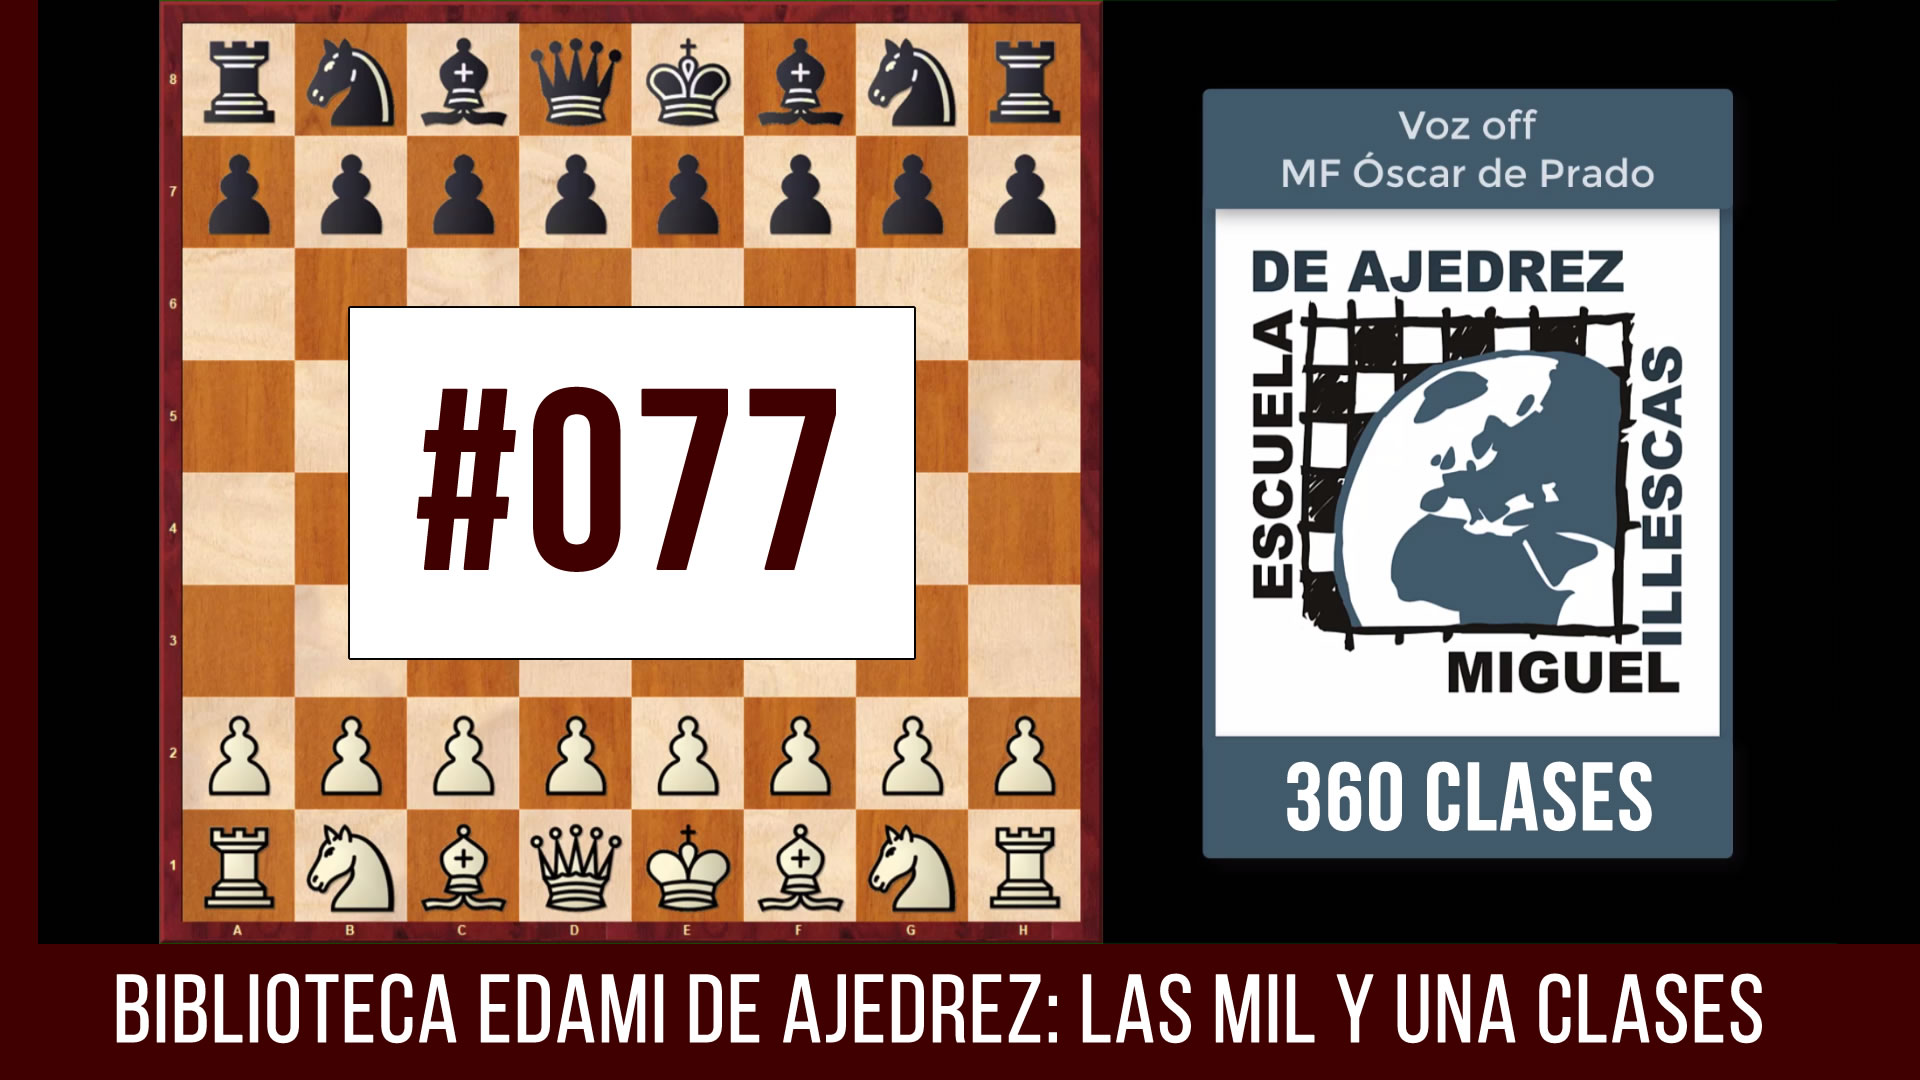 Clases de ajedrez #077 - EDAMI